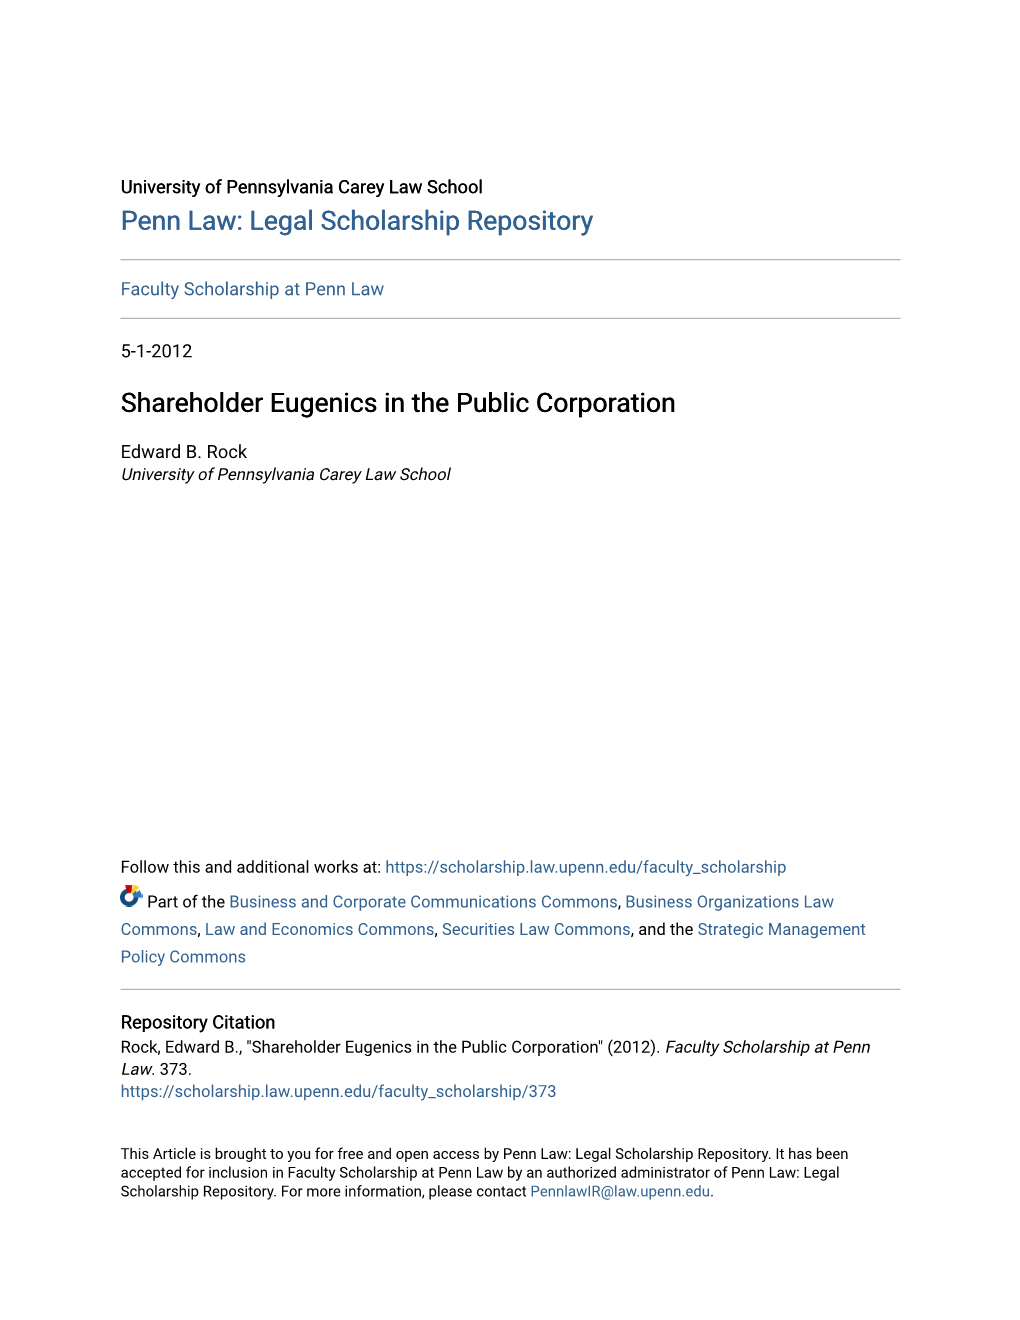 Shareholder Eugenics in the Public Corporation